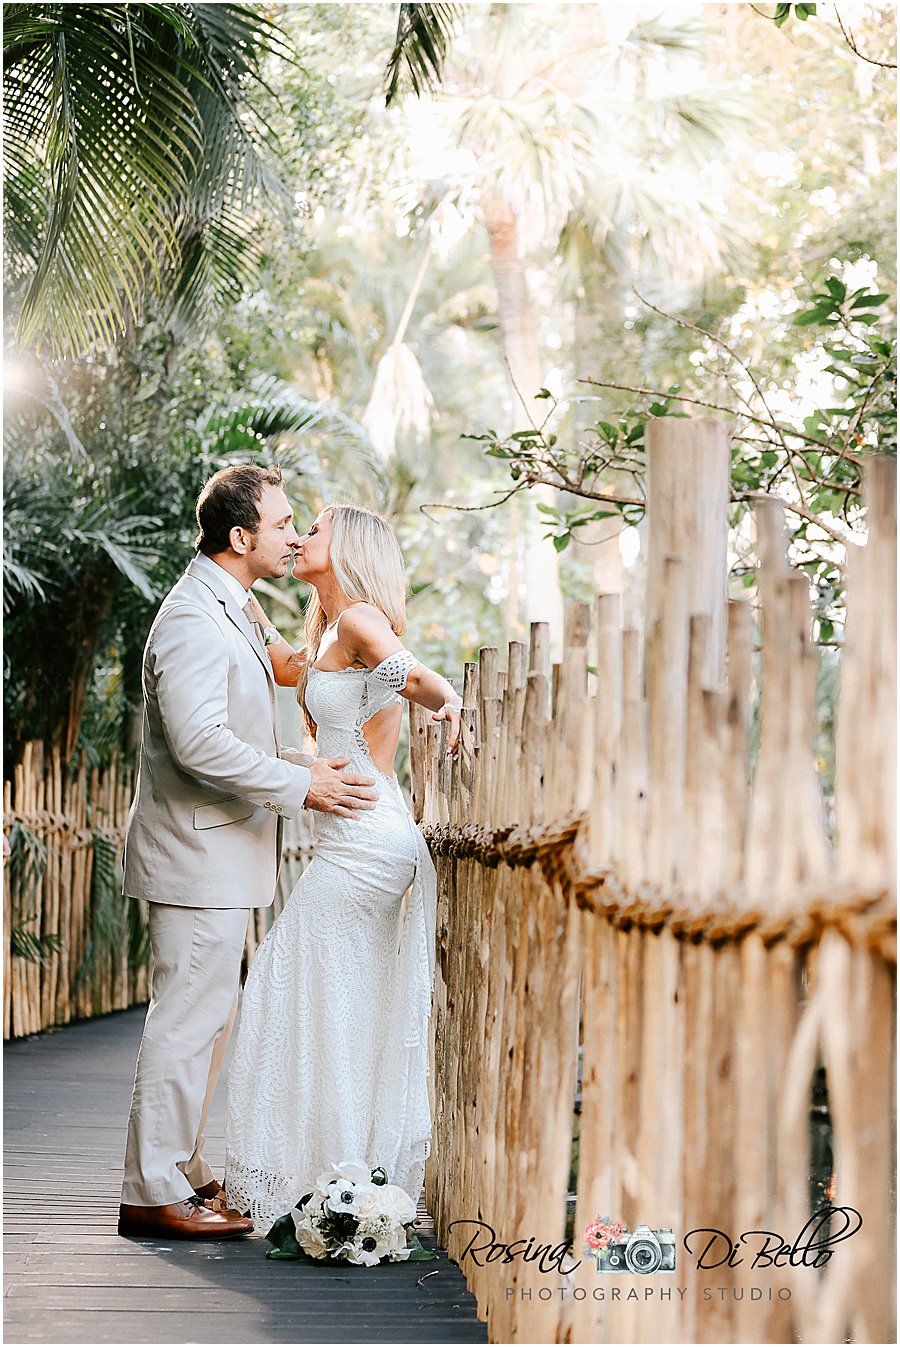 Pop Up Weddings | Palm Beach Zoo | Palm Beach, FL | Married in Palm Beach | www.marriedinpalmbeach.com | Rosina DiBello Photography Studio